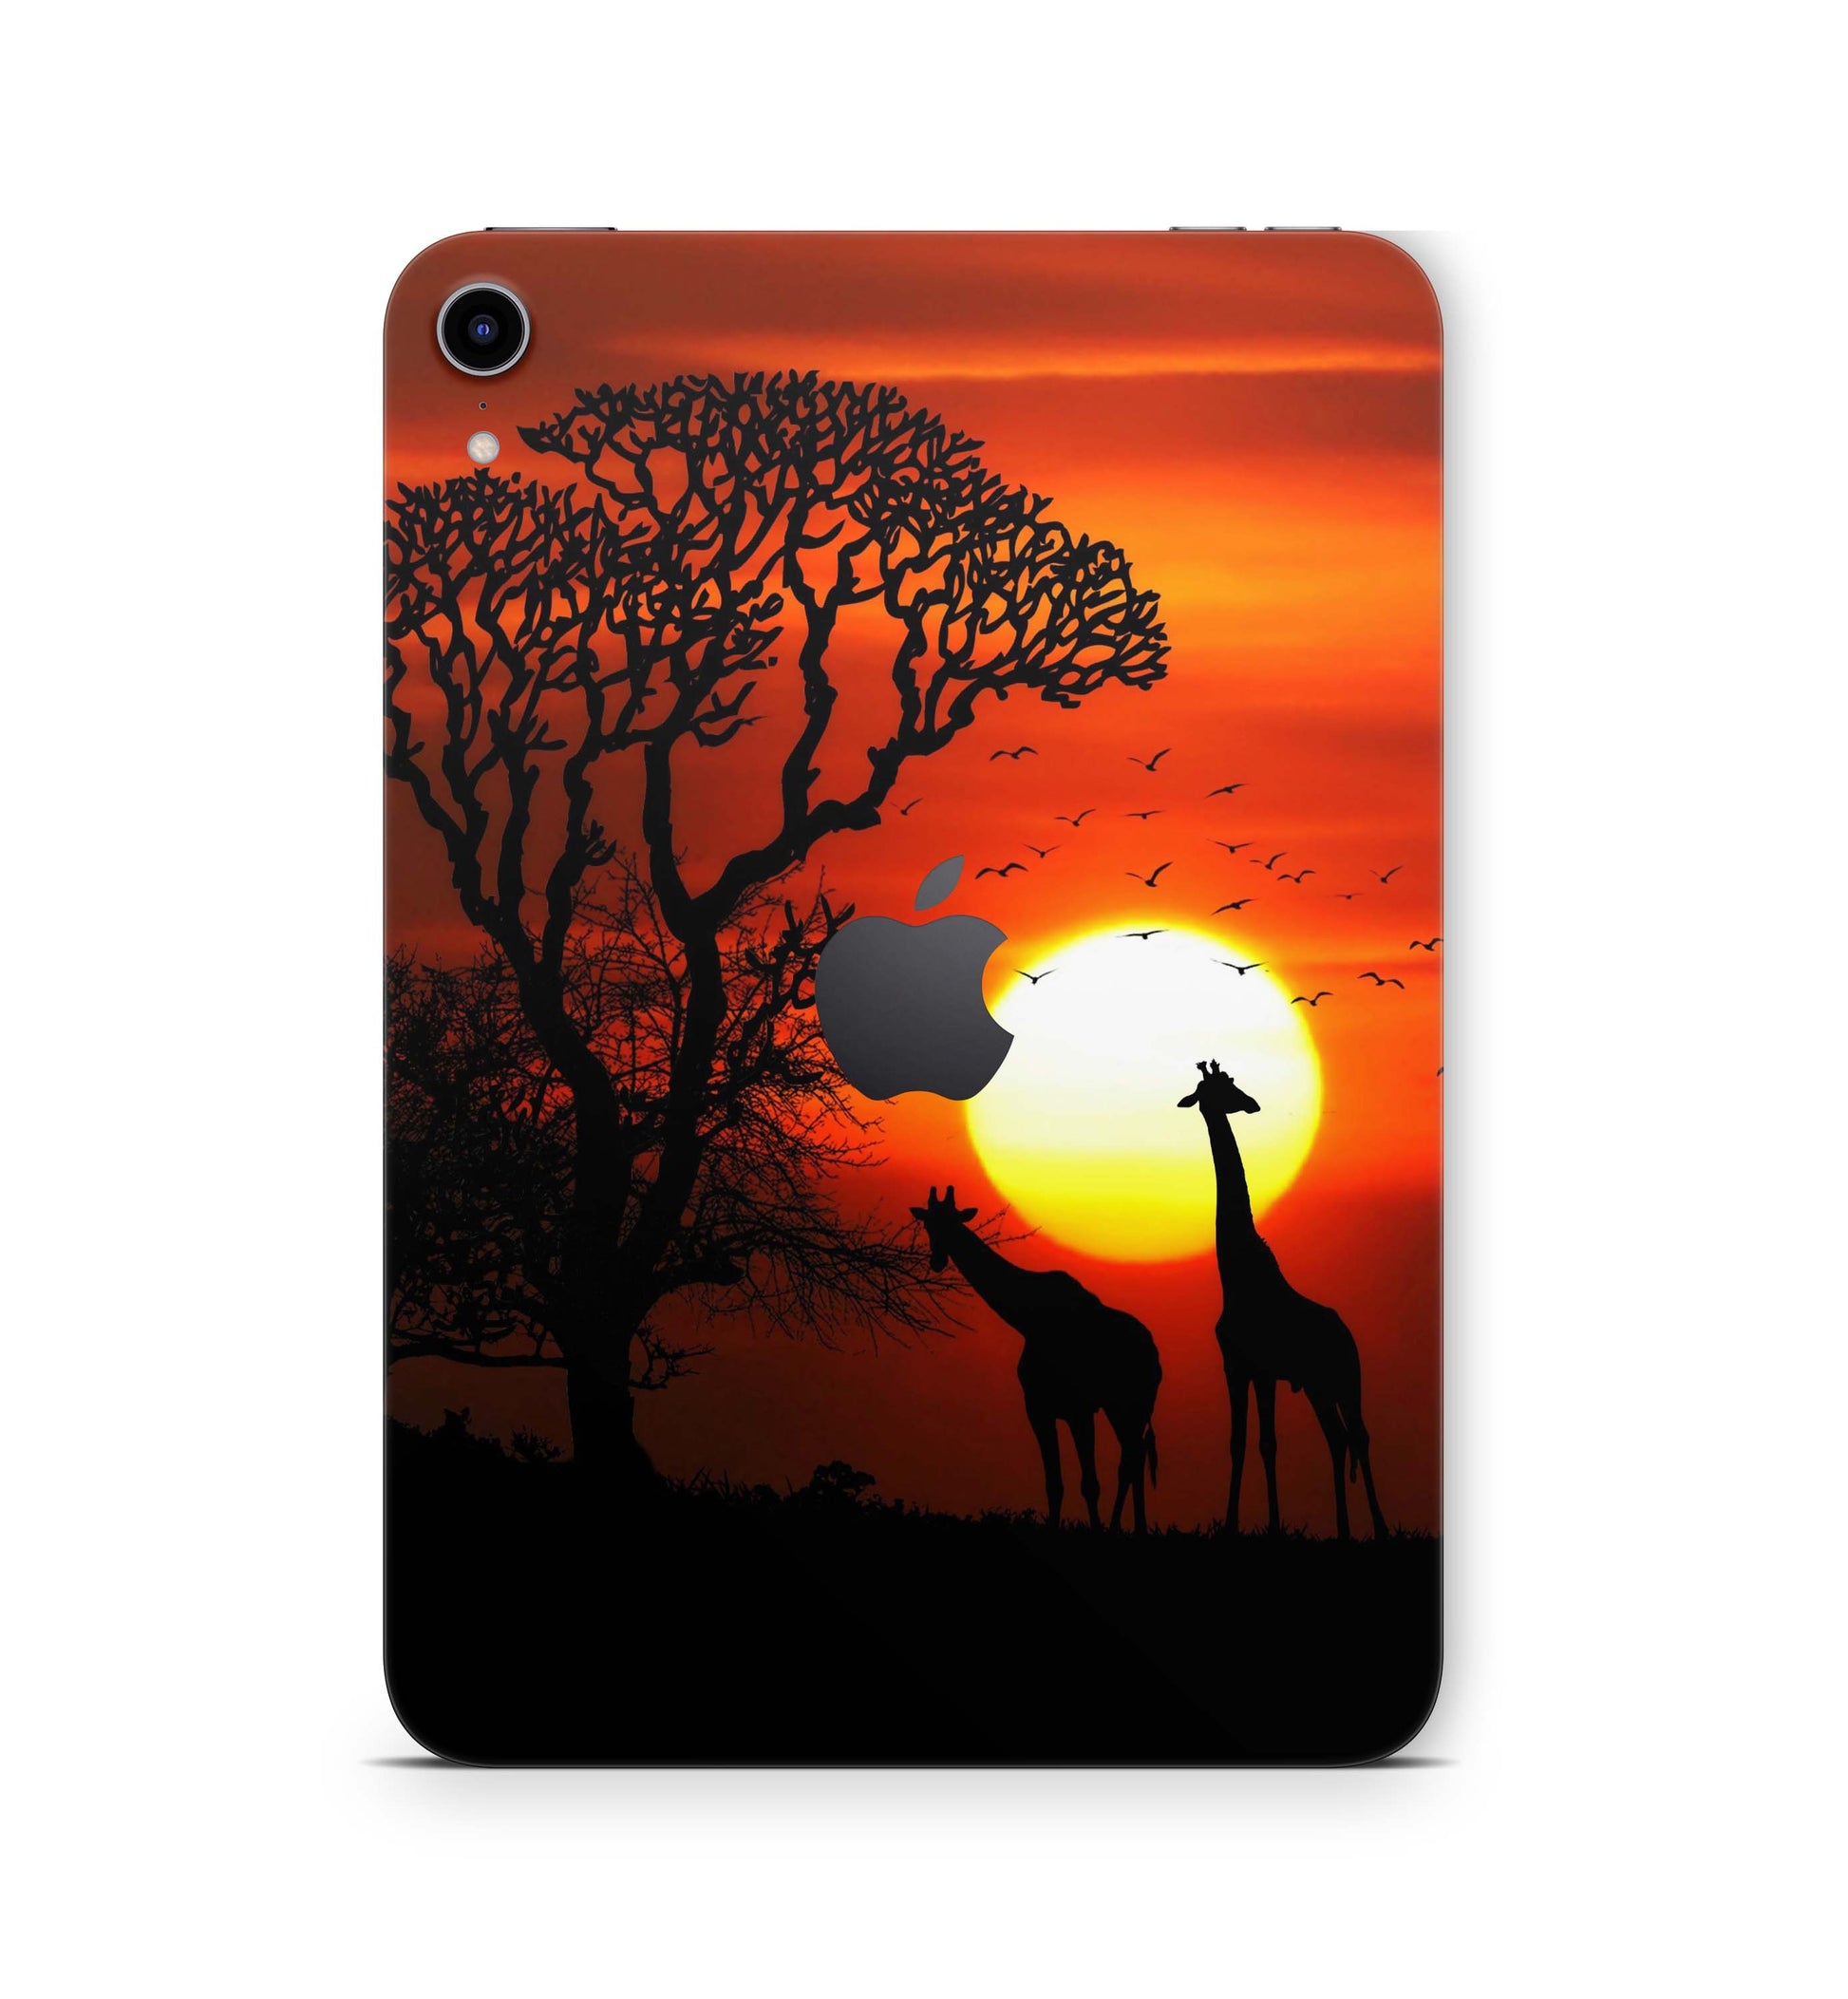 iPad Air Skin Design Cover Folie Vinyl Skins & Wraps für alle iPad Air Modelle Aufkleber Skins4u Afrika  